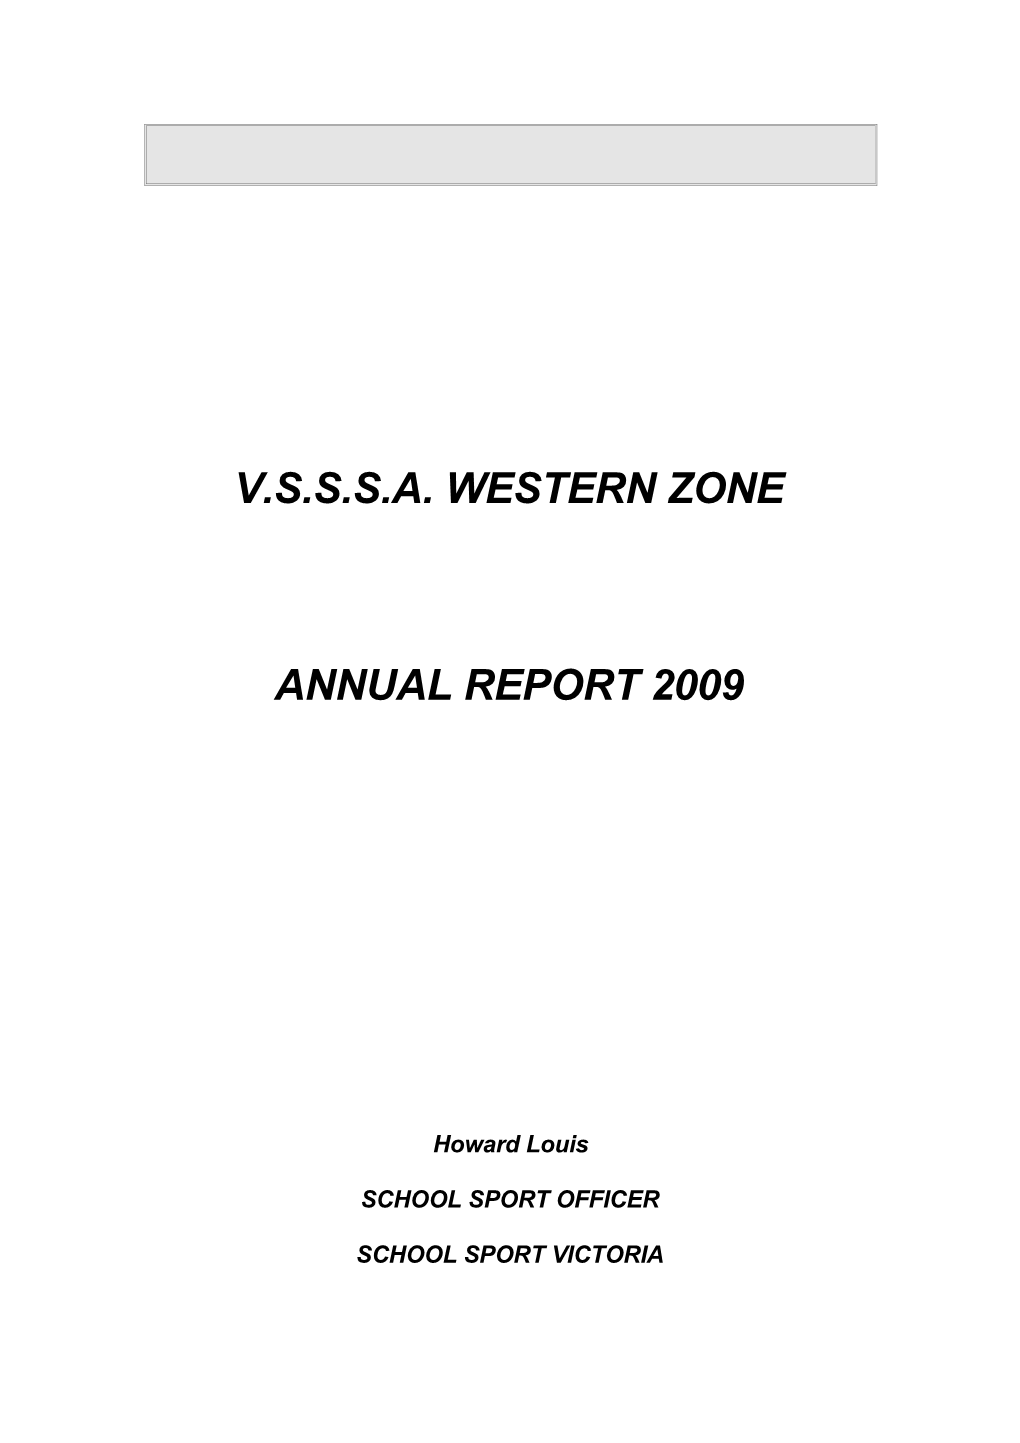 V.S.S.S.A. Western Zone